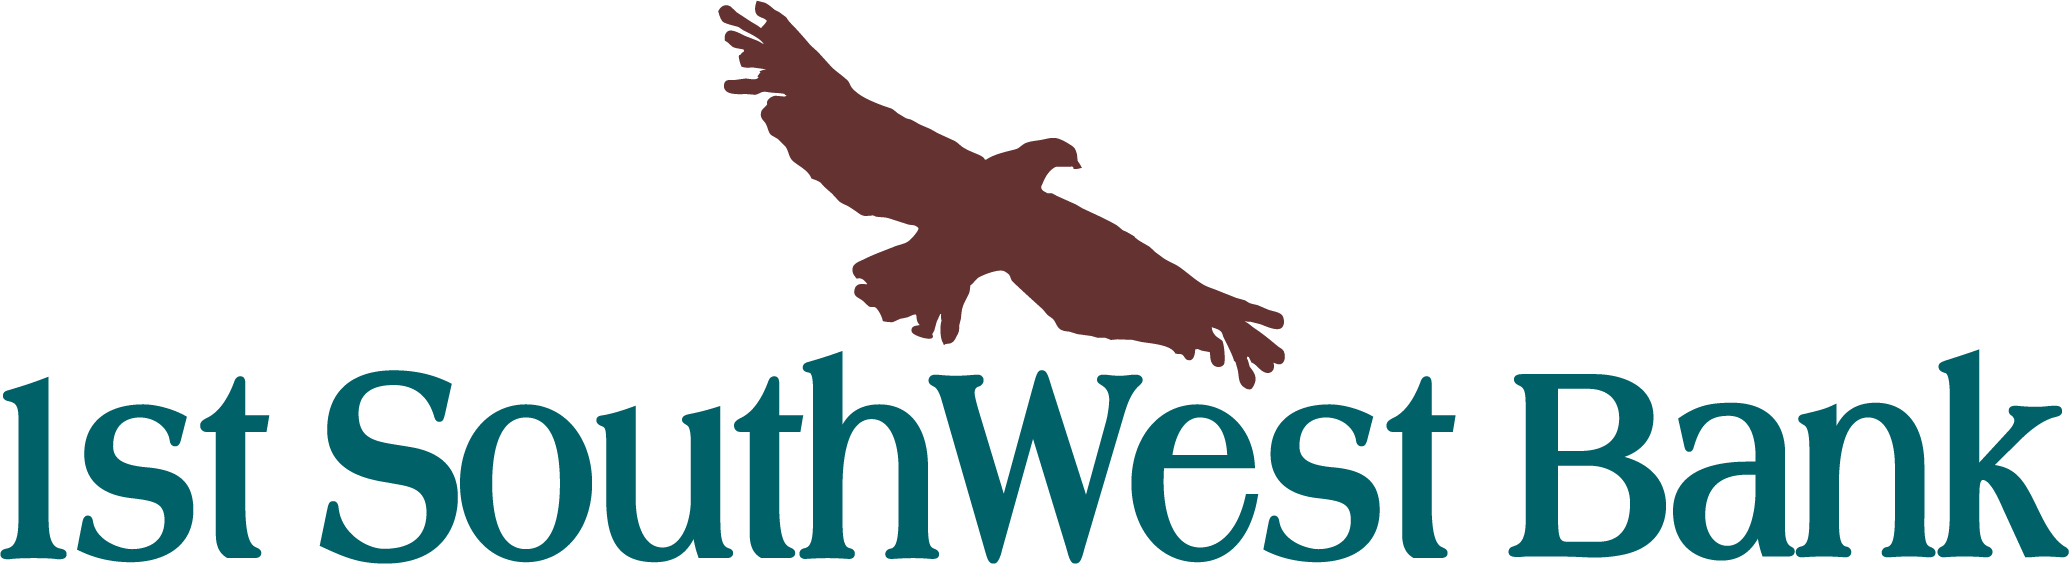 First Southwest Bank Logo